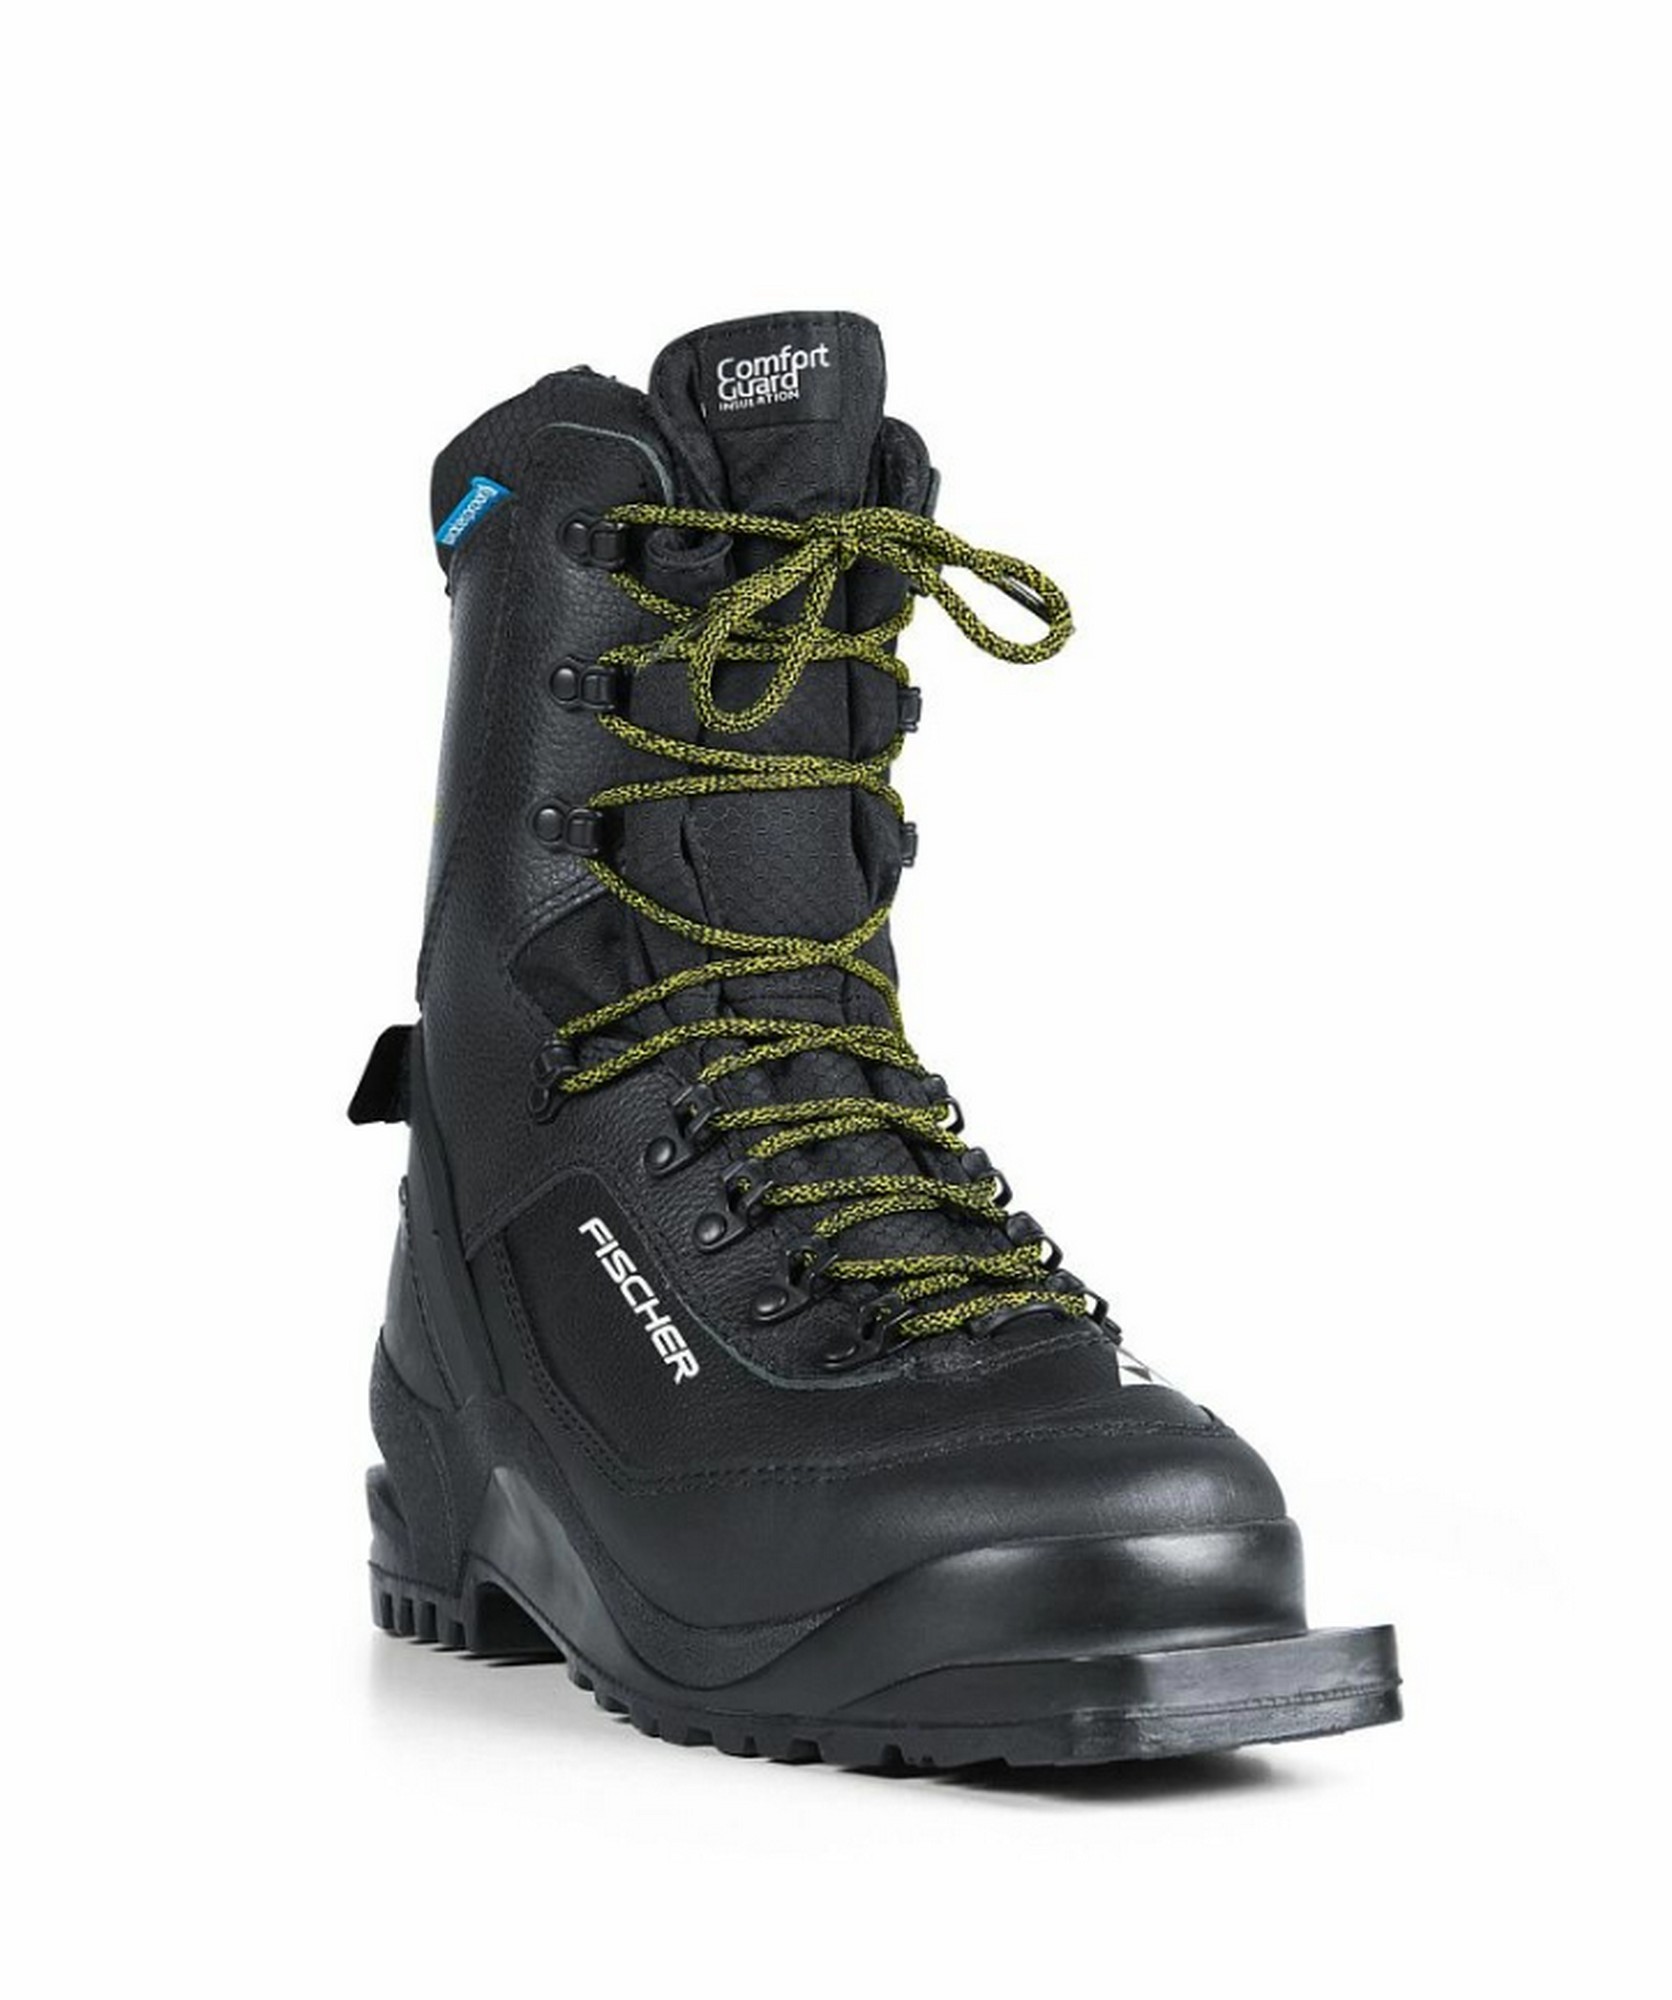 Лыжные ботинки Fischer NNN (BC) BCX Transnordic 75 Waterproof S37721 черный 1672_2000